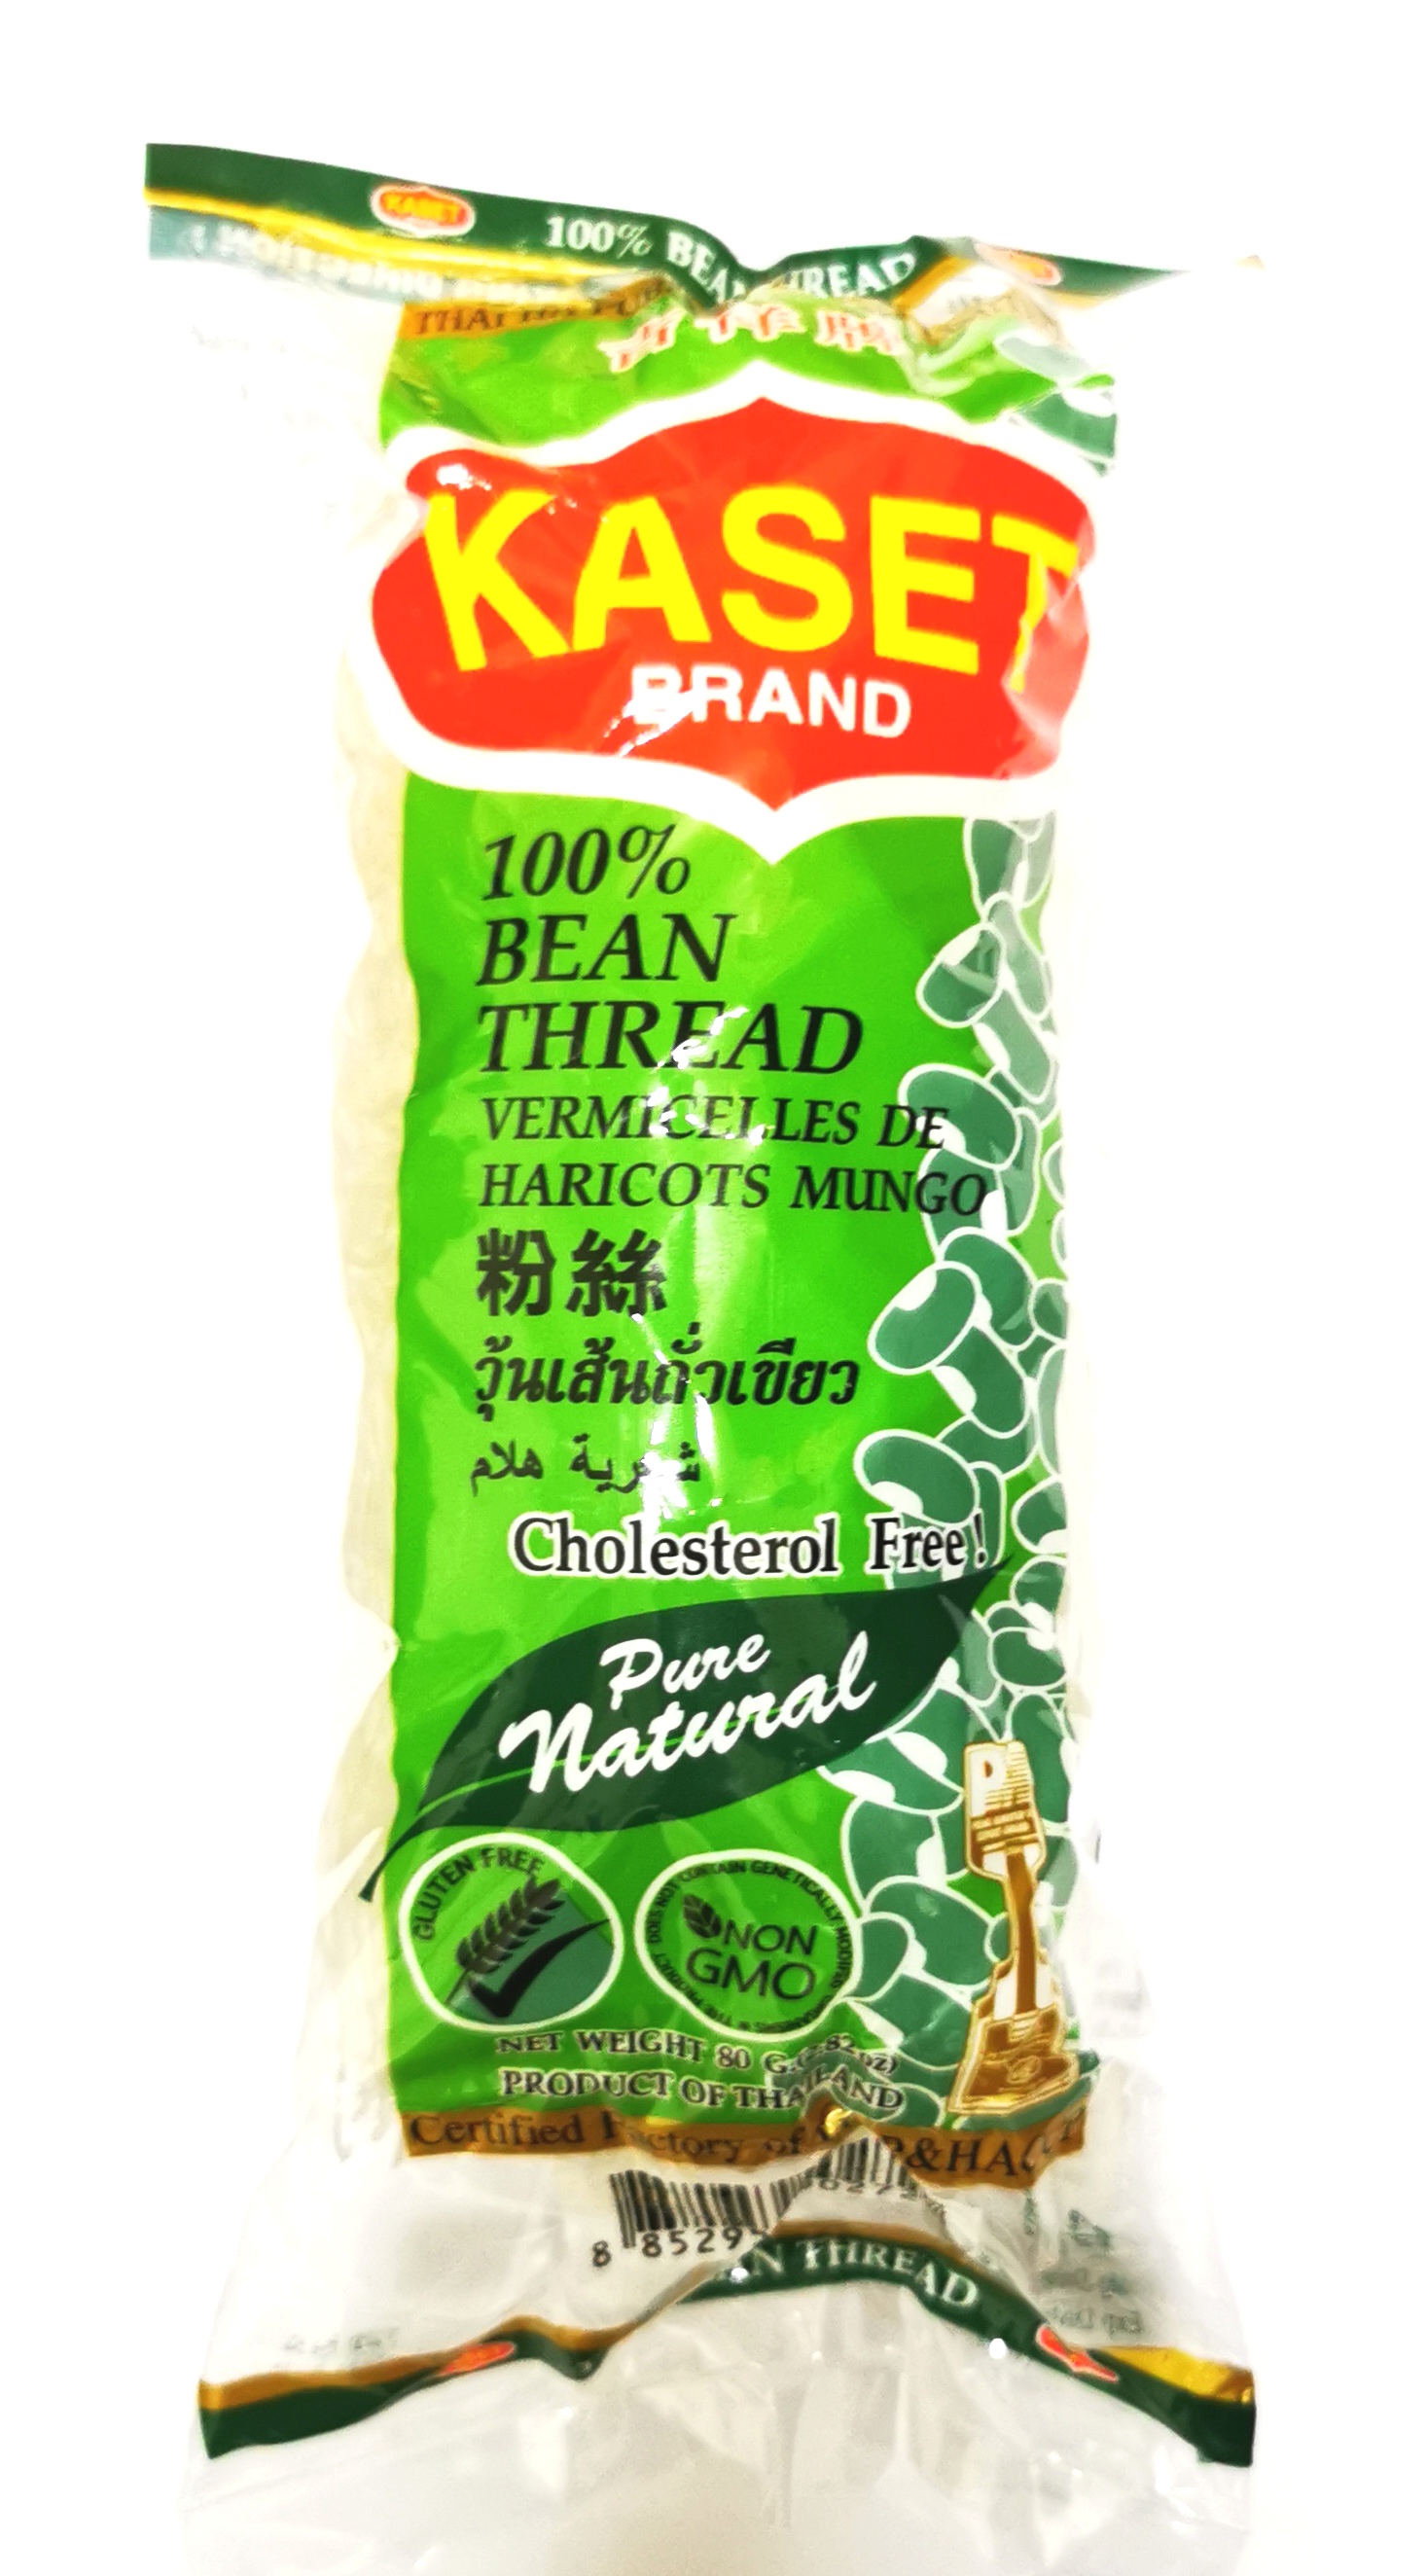 Kaset Brand Bean Thread80g